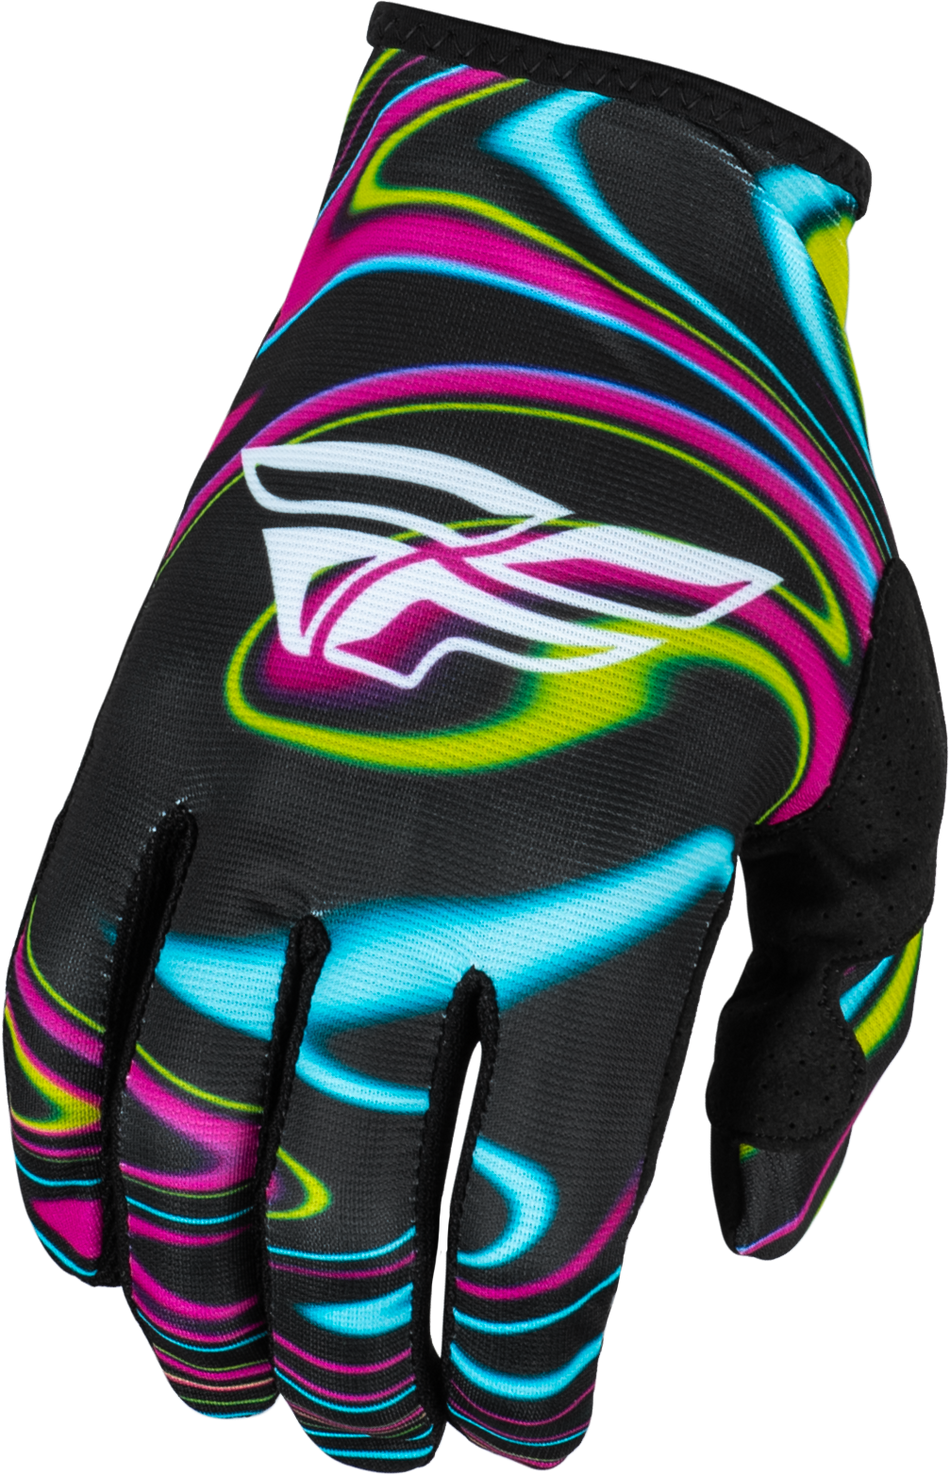 FLY RACING Lite Warped Gloves Black/Pink/Electric Blue Sm 377-743S